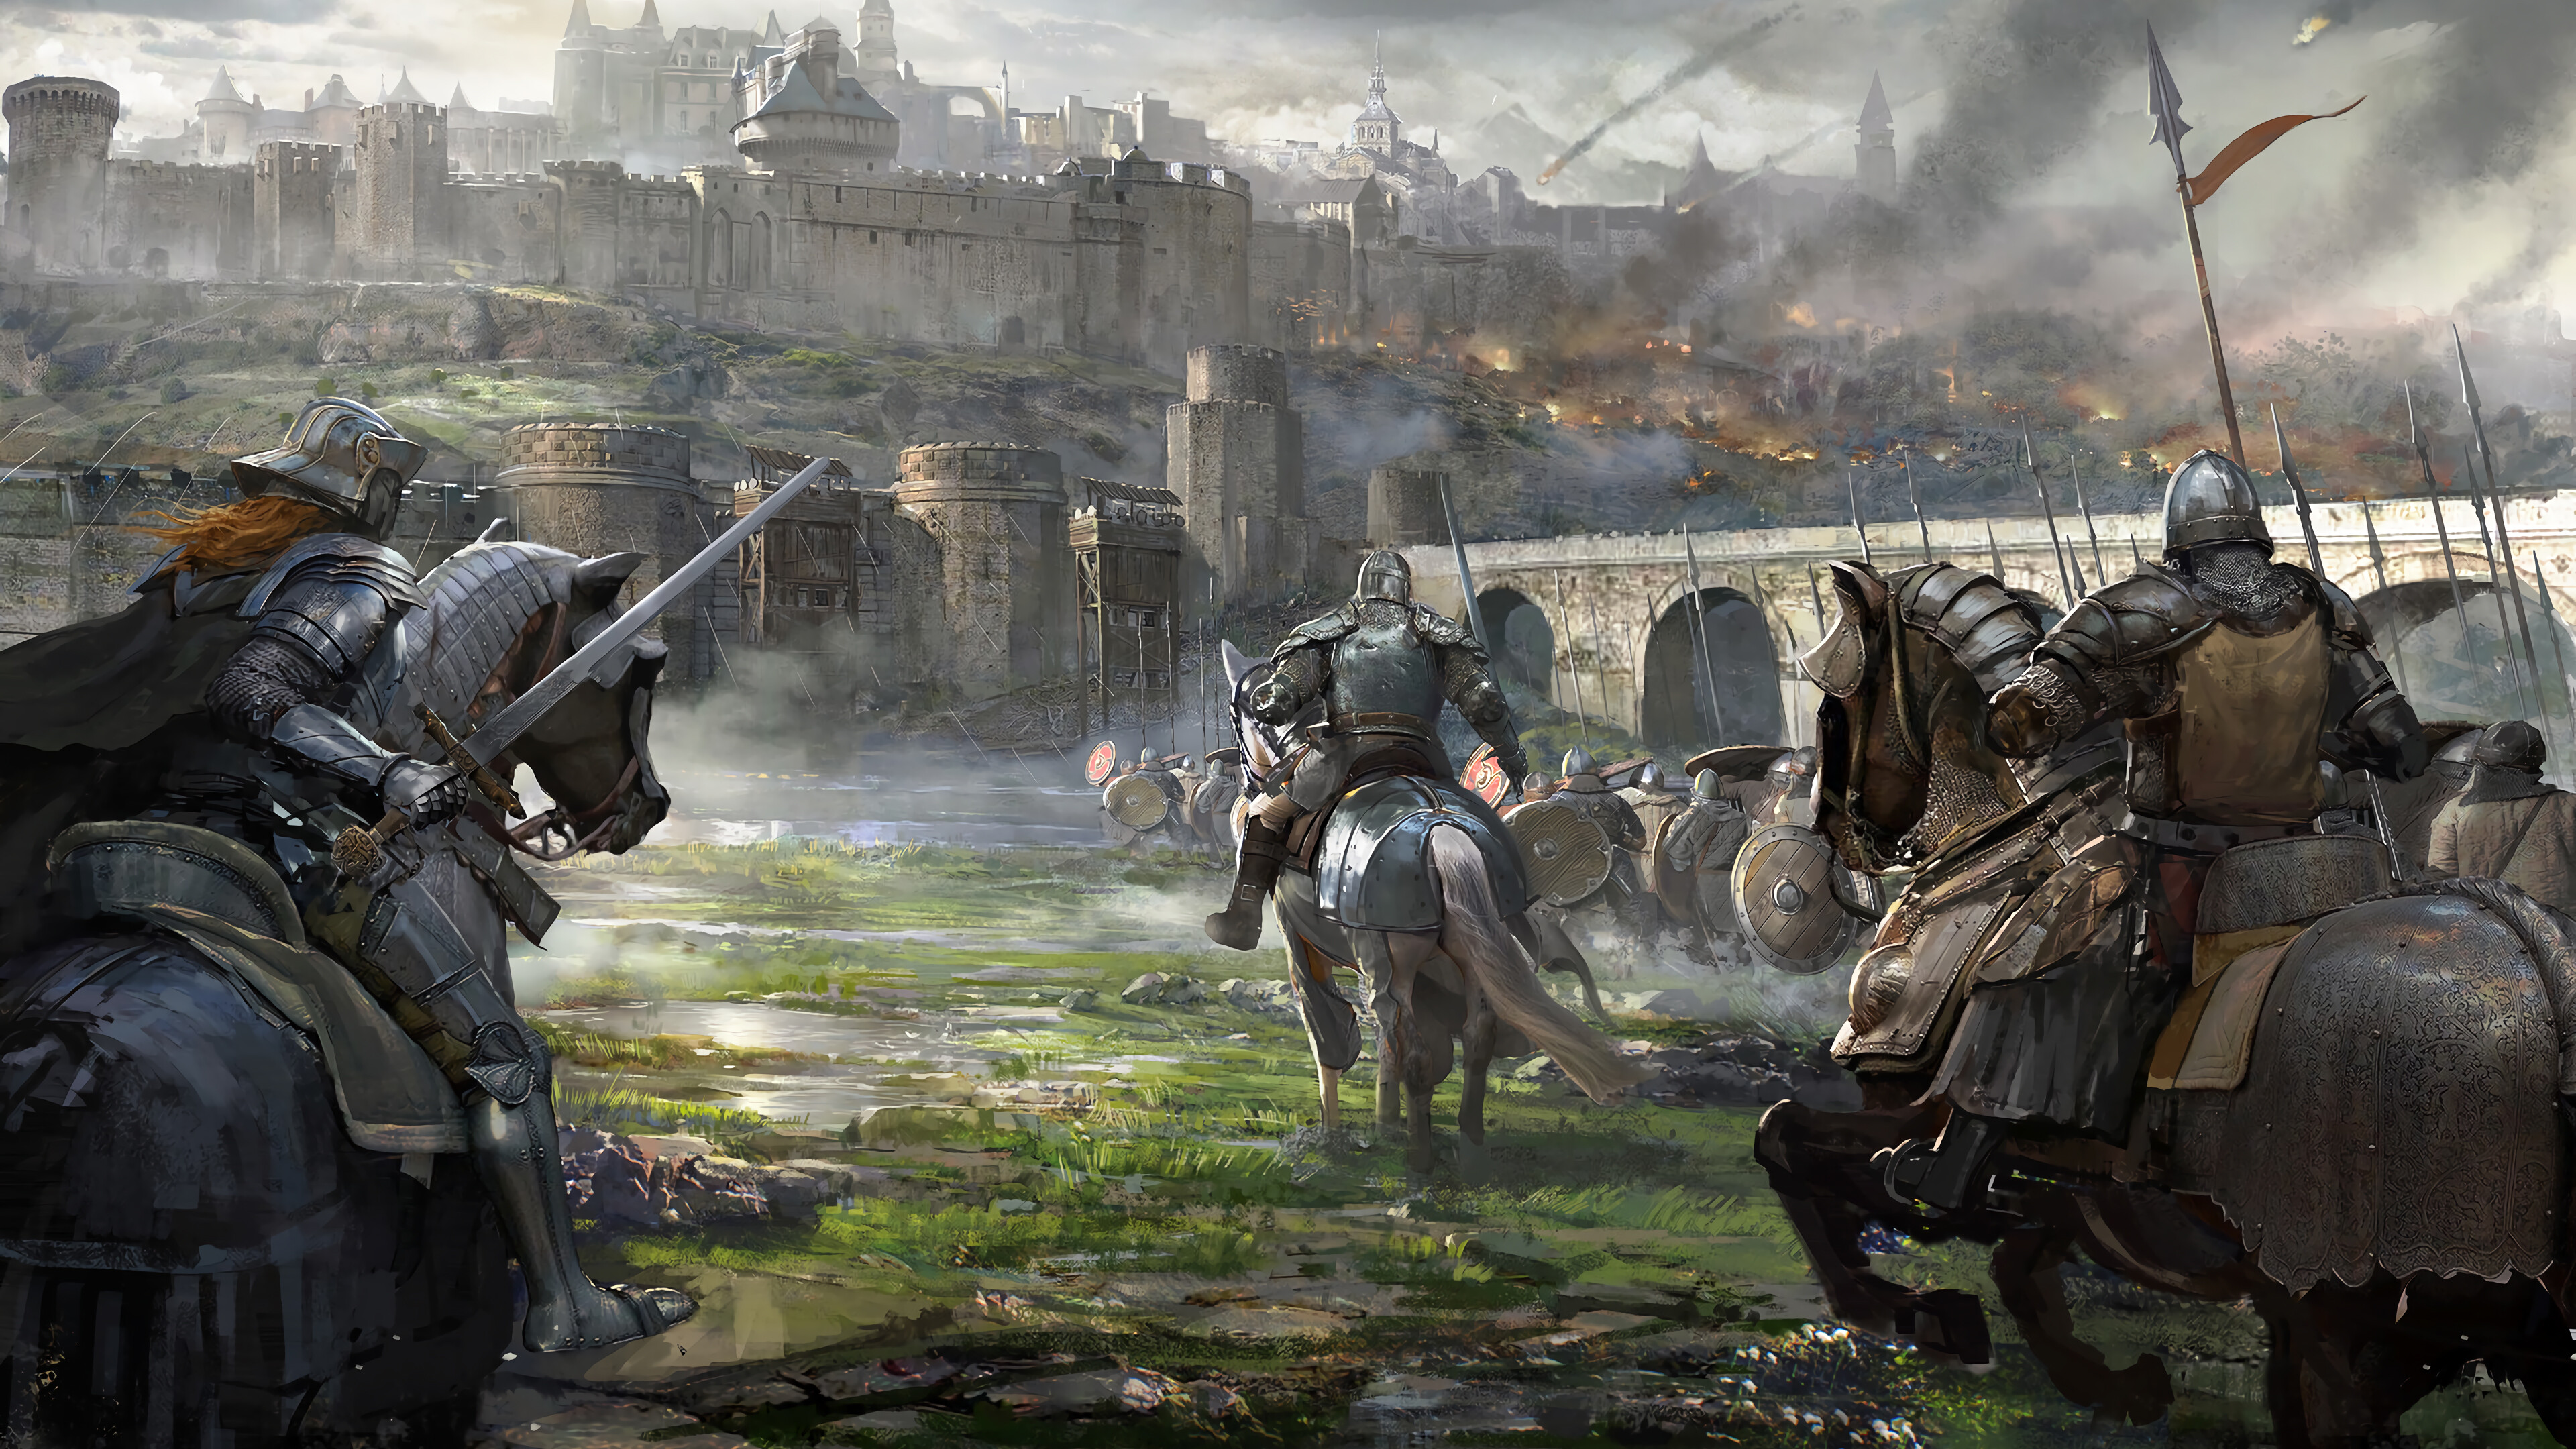 Knight Castle Siege Medieval Battle Fantasy 4K Wallpaper 4973 3840x2160